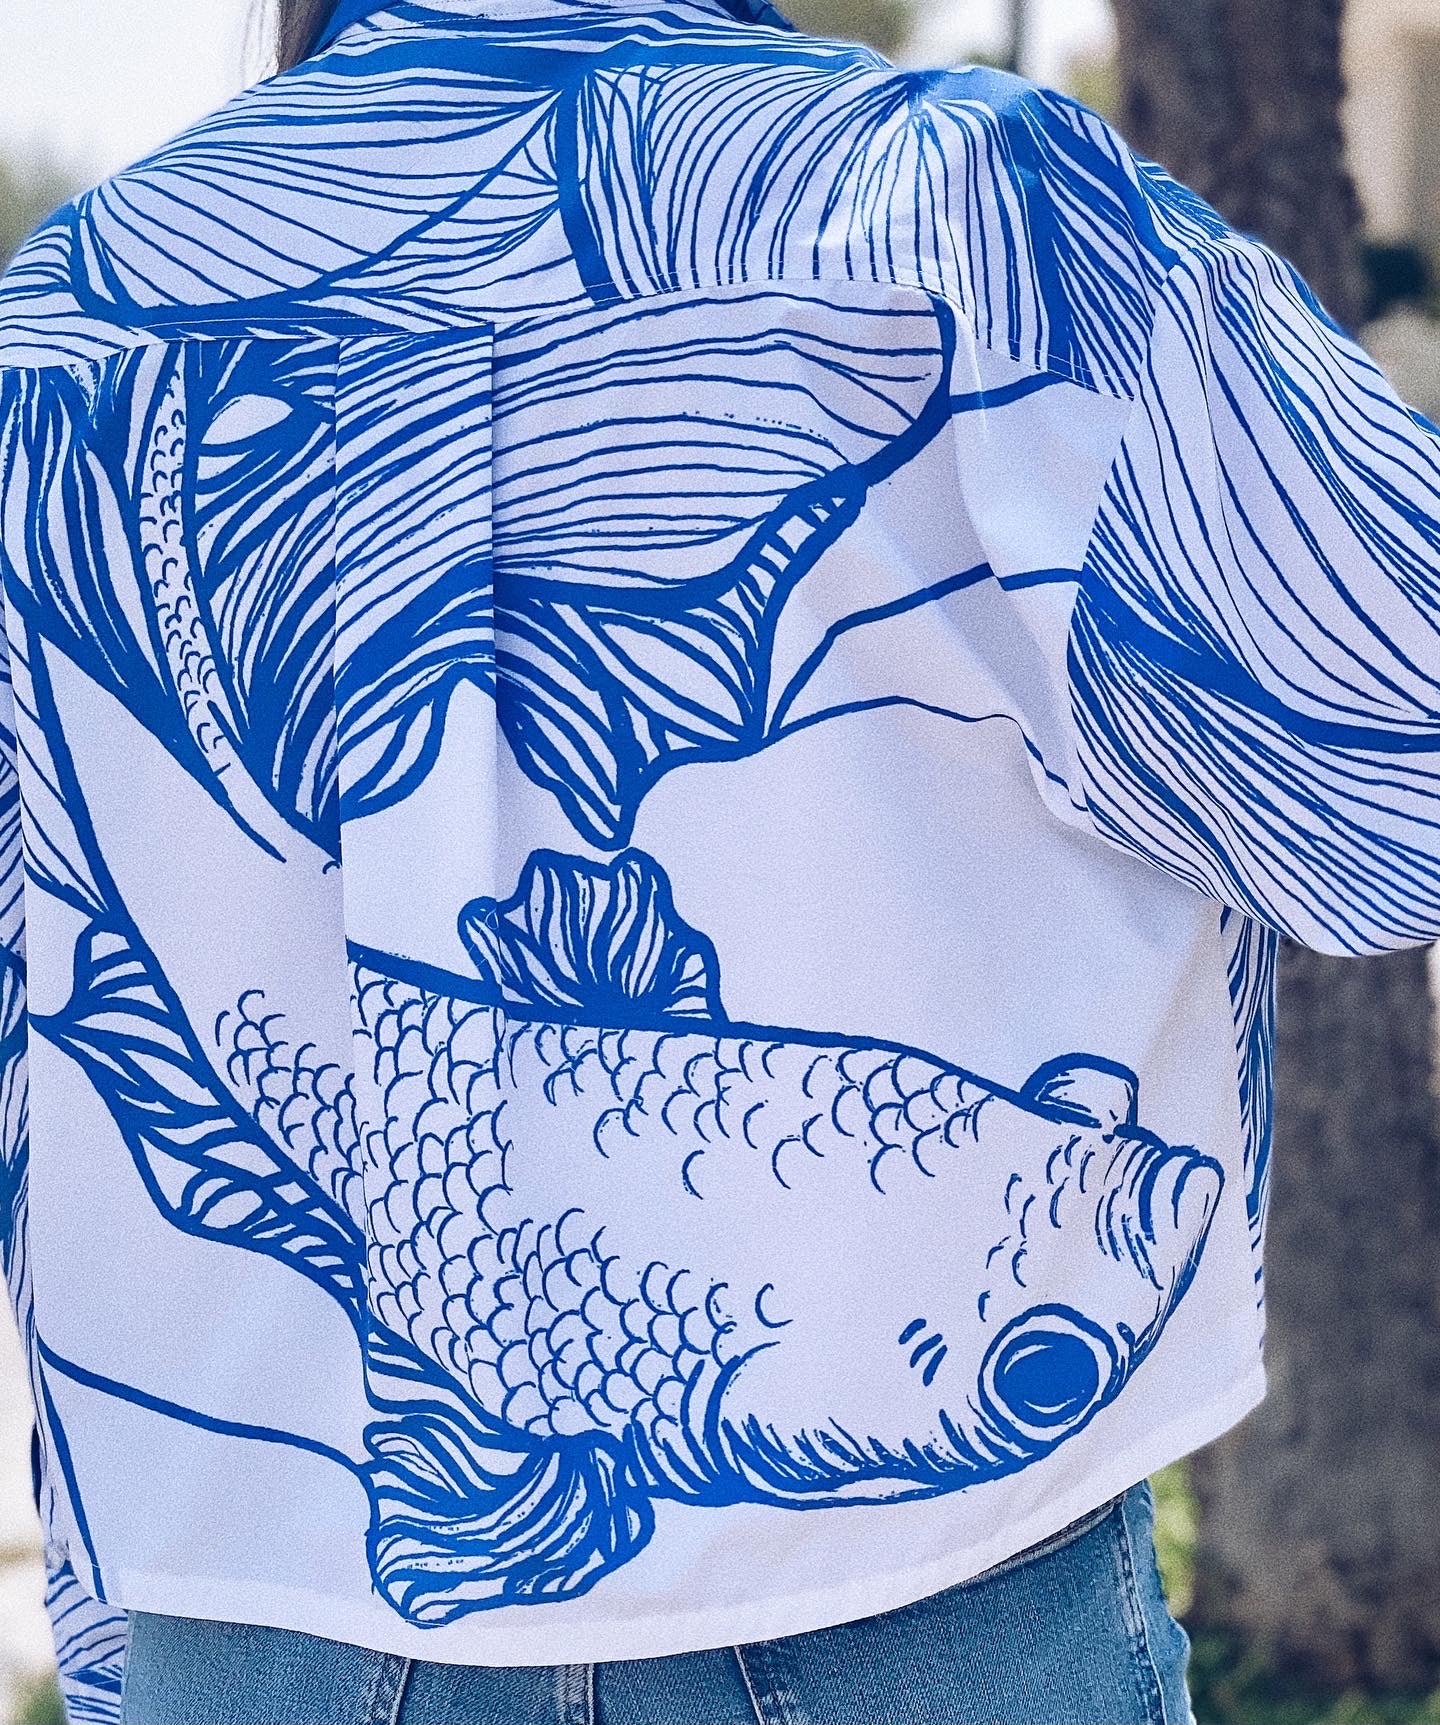 Betta fish shirt